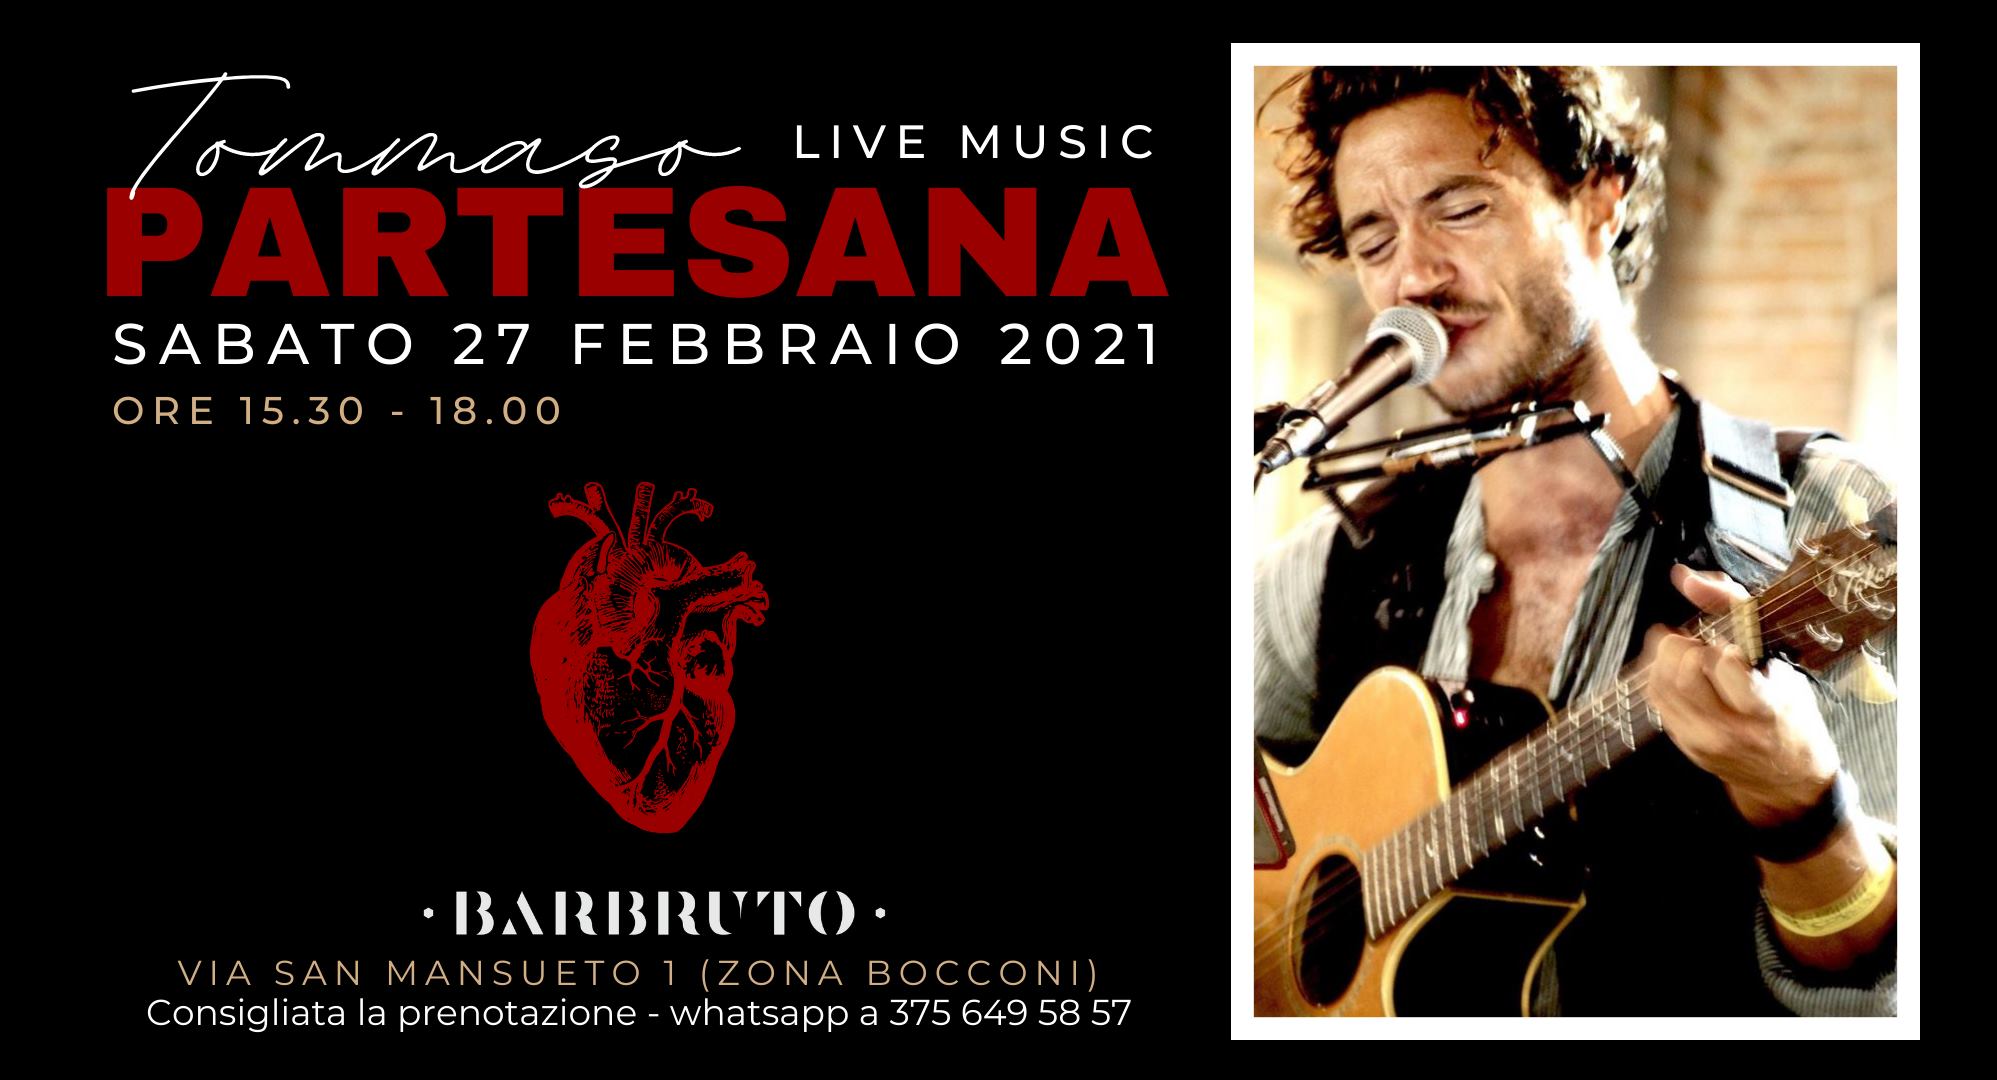 Barbruto Milano, Tommaso Partesana Live Concert